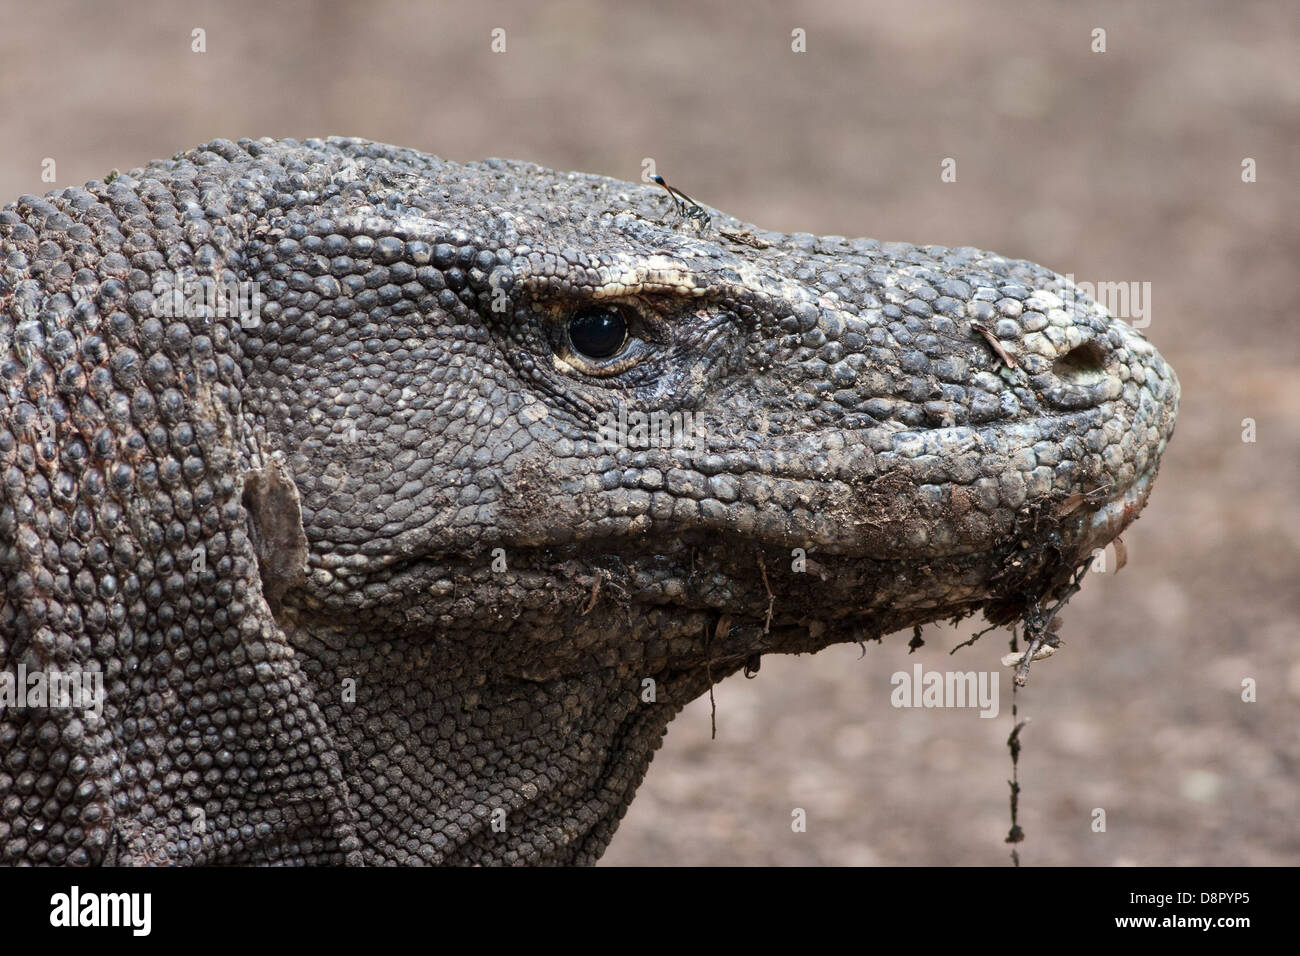 Komodo dragon in close-up Stock Photo